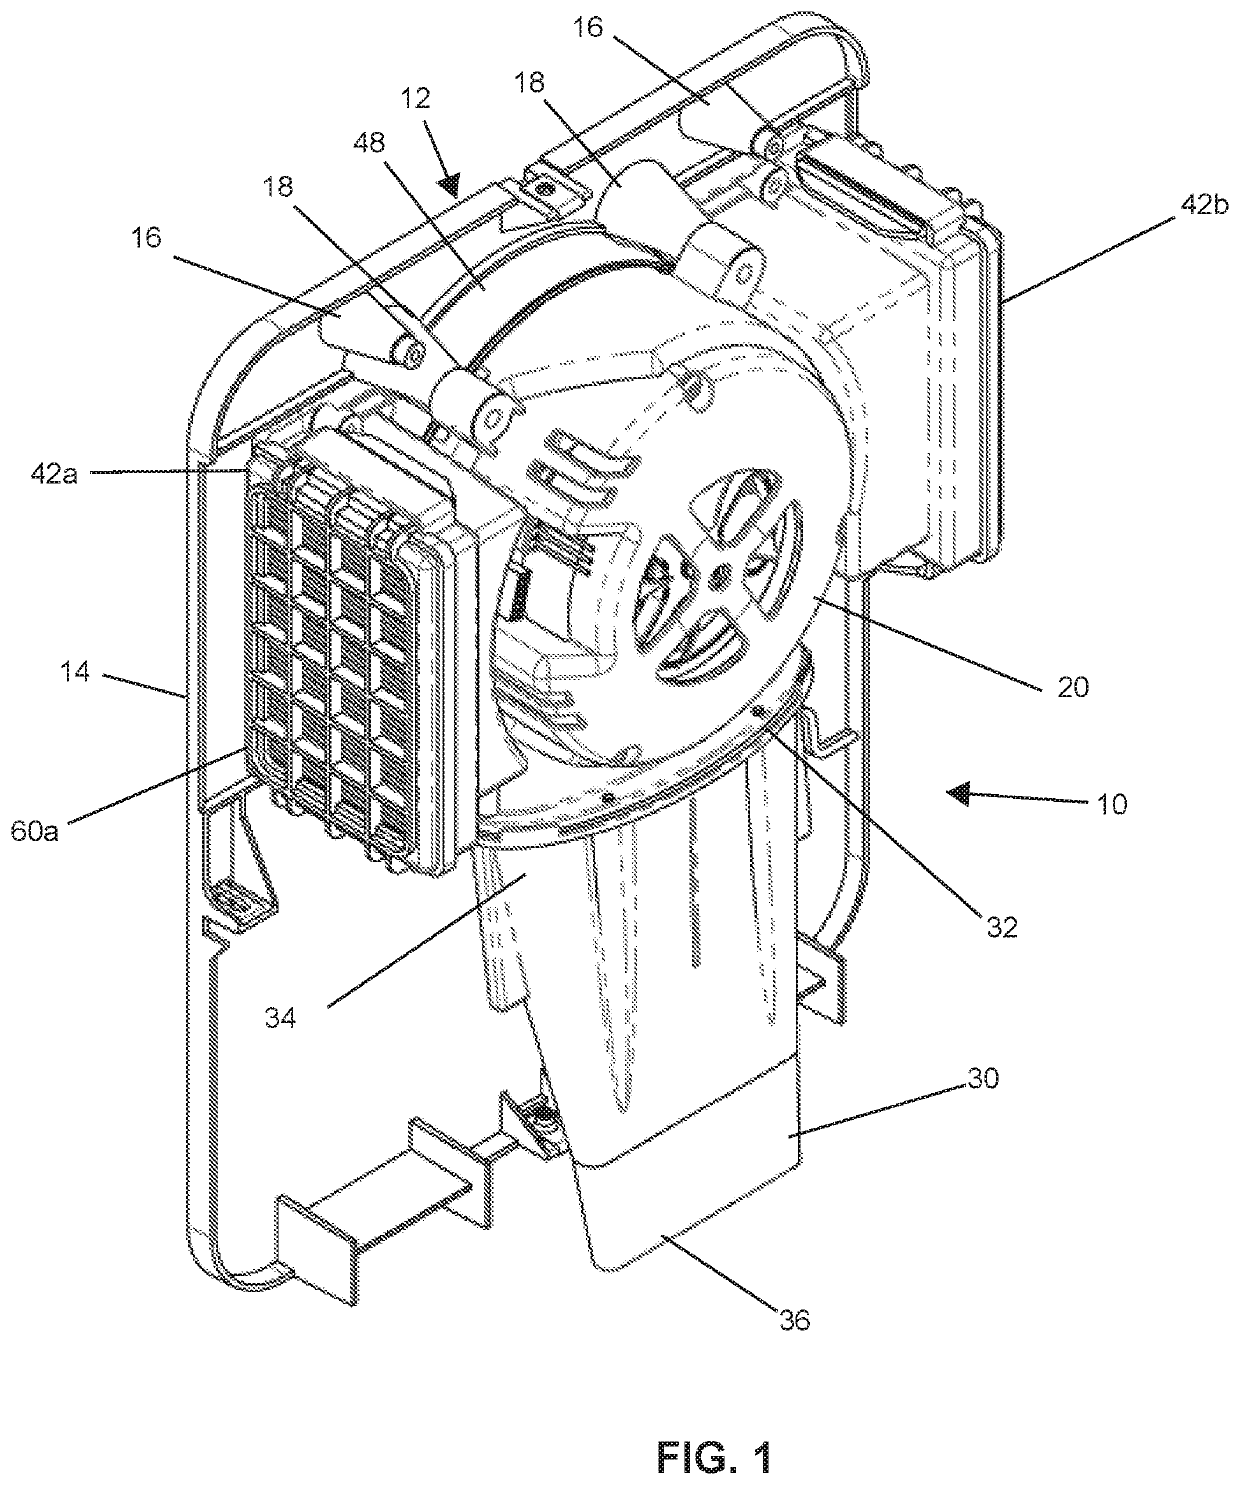 Motor intake sealing filtration system for hand dryer